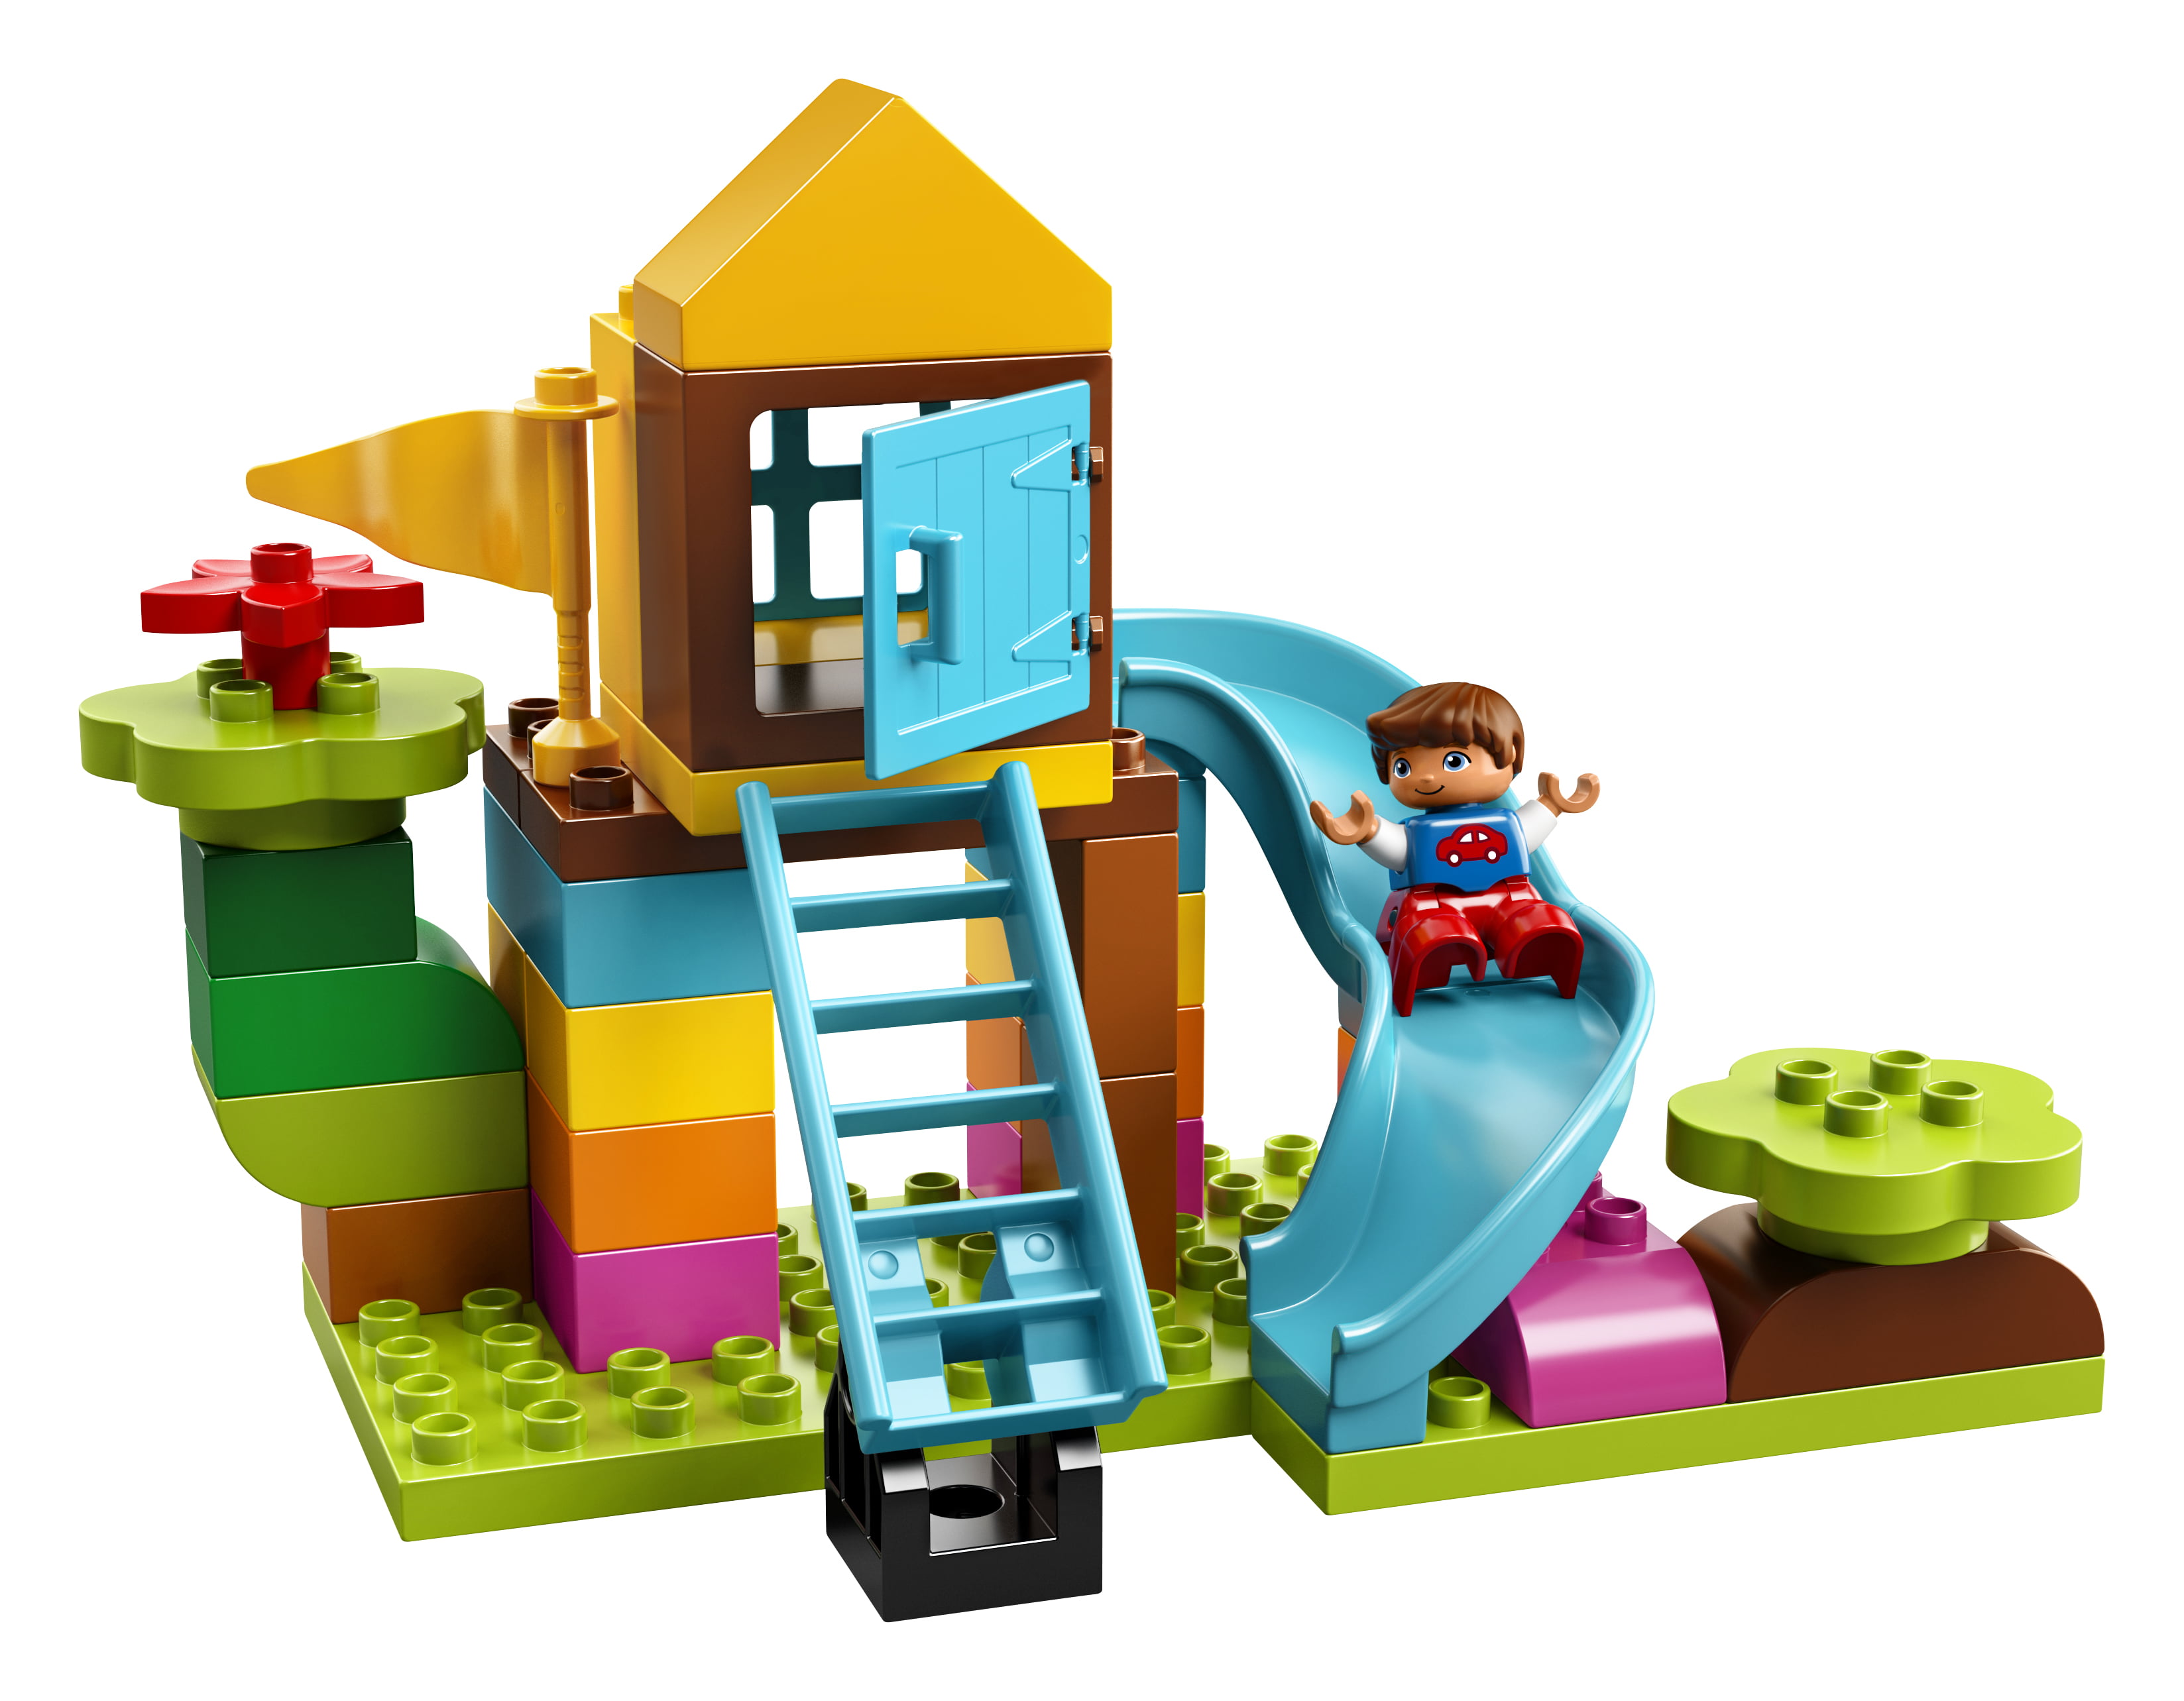 igen Krydret Settle LEGO DUPLO My First Large Playground Brick Box 10864 - Walmart.com